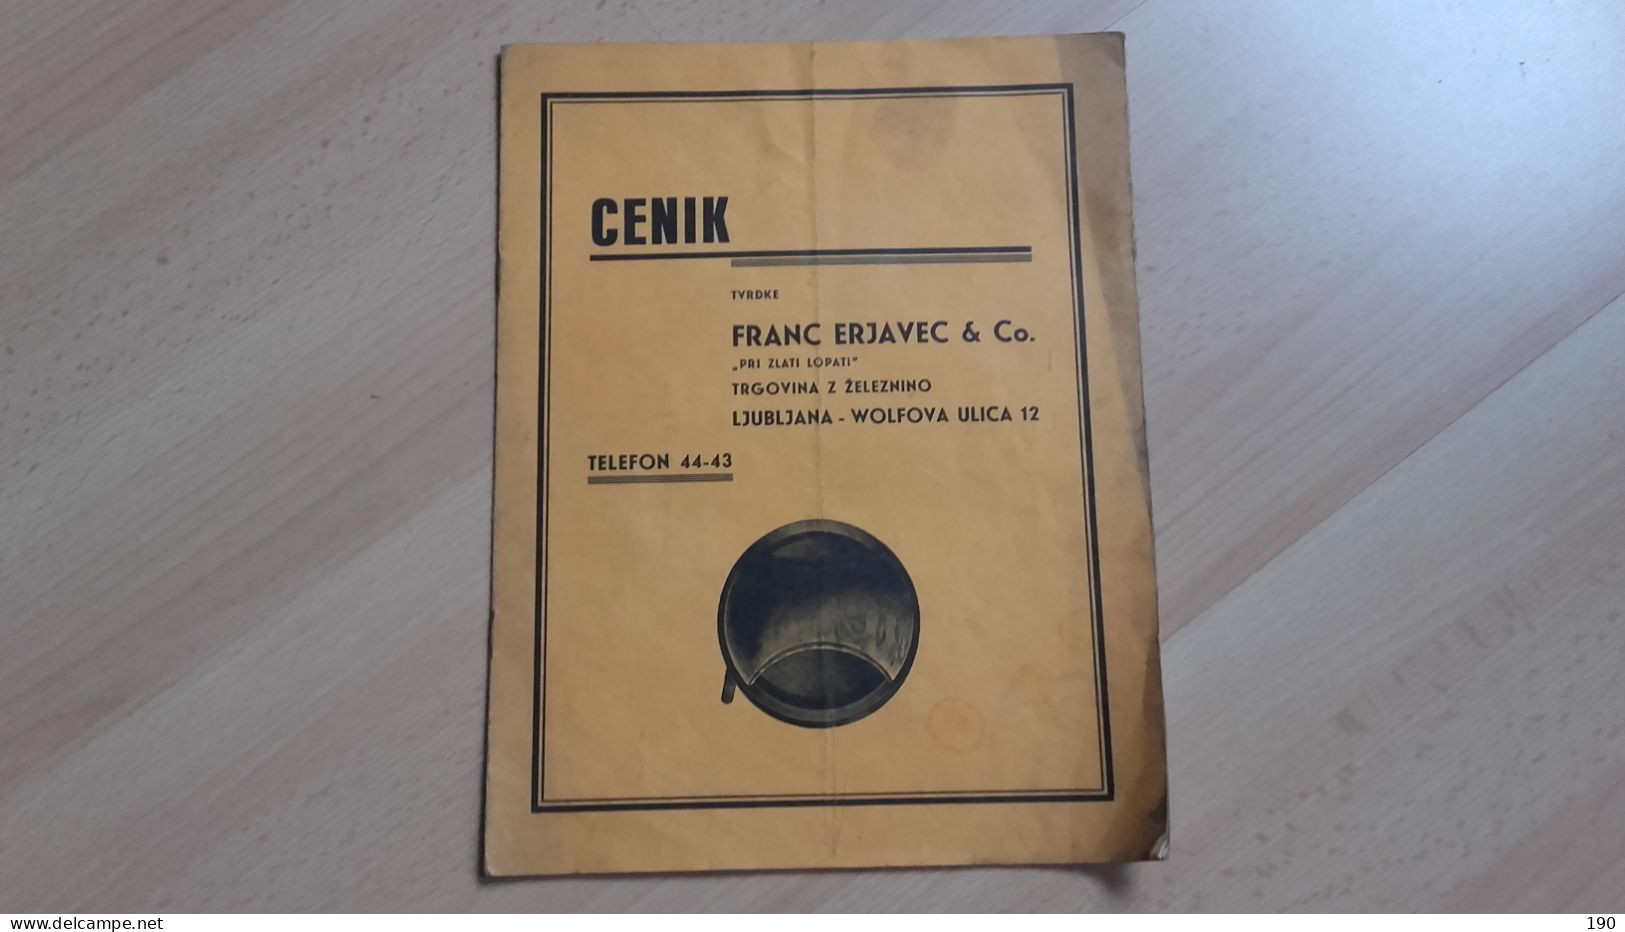 Cenik Tvrdke Franc Erjavec&Co.Trgovina Z Zeleznino,Wolfova Ulica 12,Ljubljana - Cachets Généralité